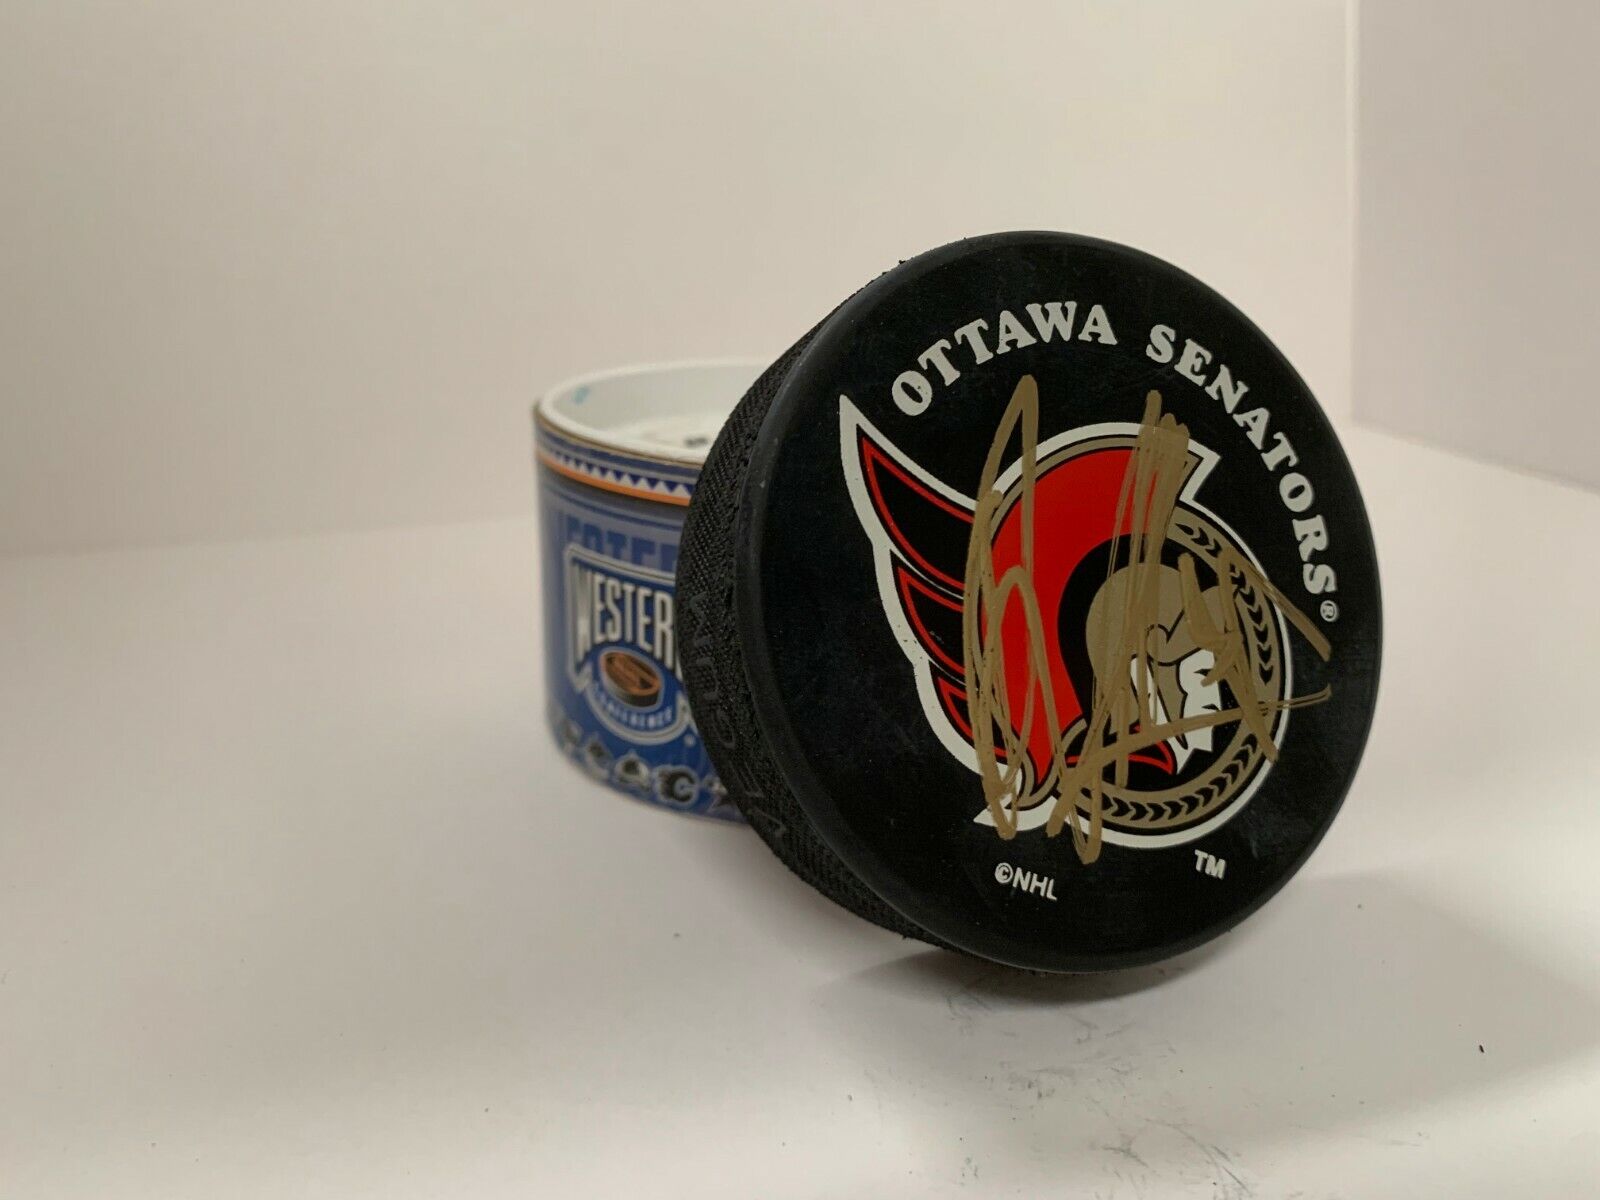 Radek Bonk Autographed Signed Ottawa Senators Hockey Puck W/ ASCF COA